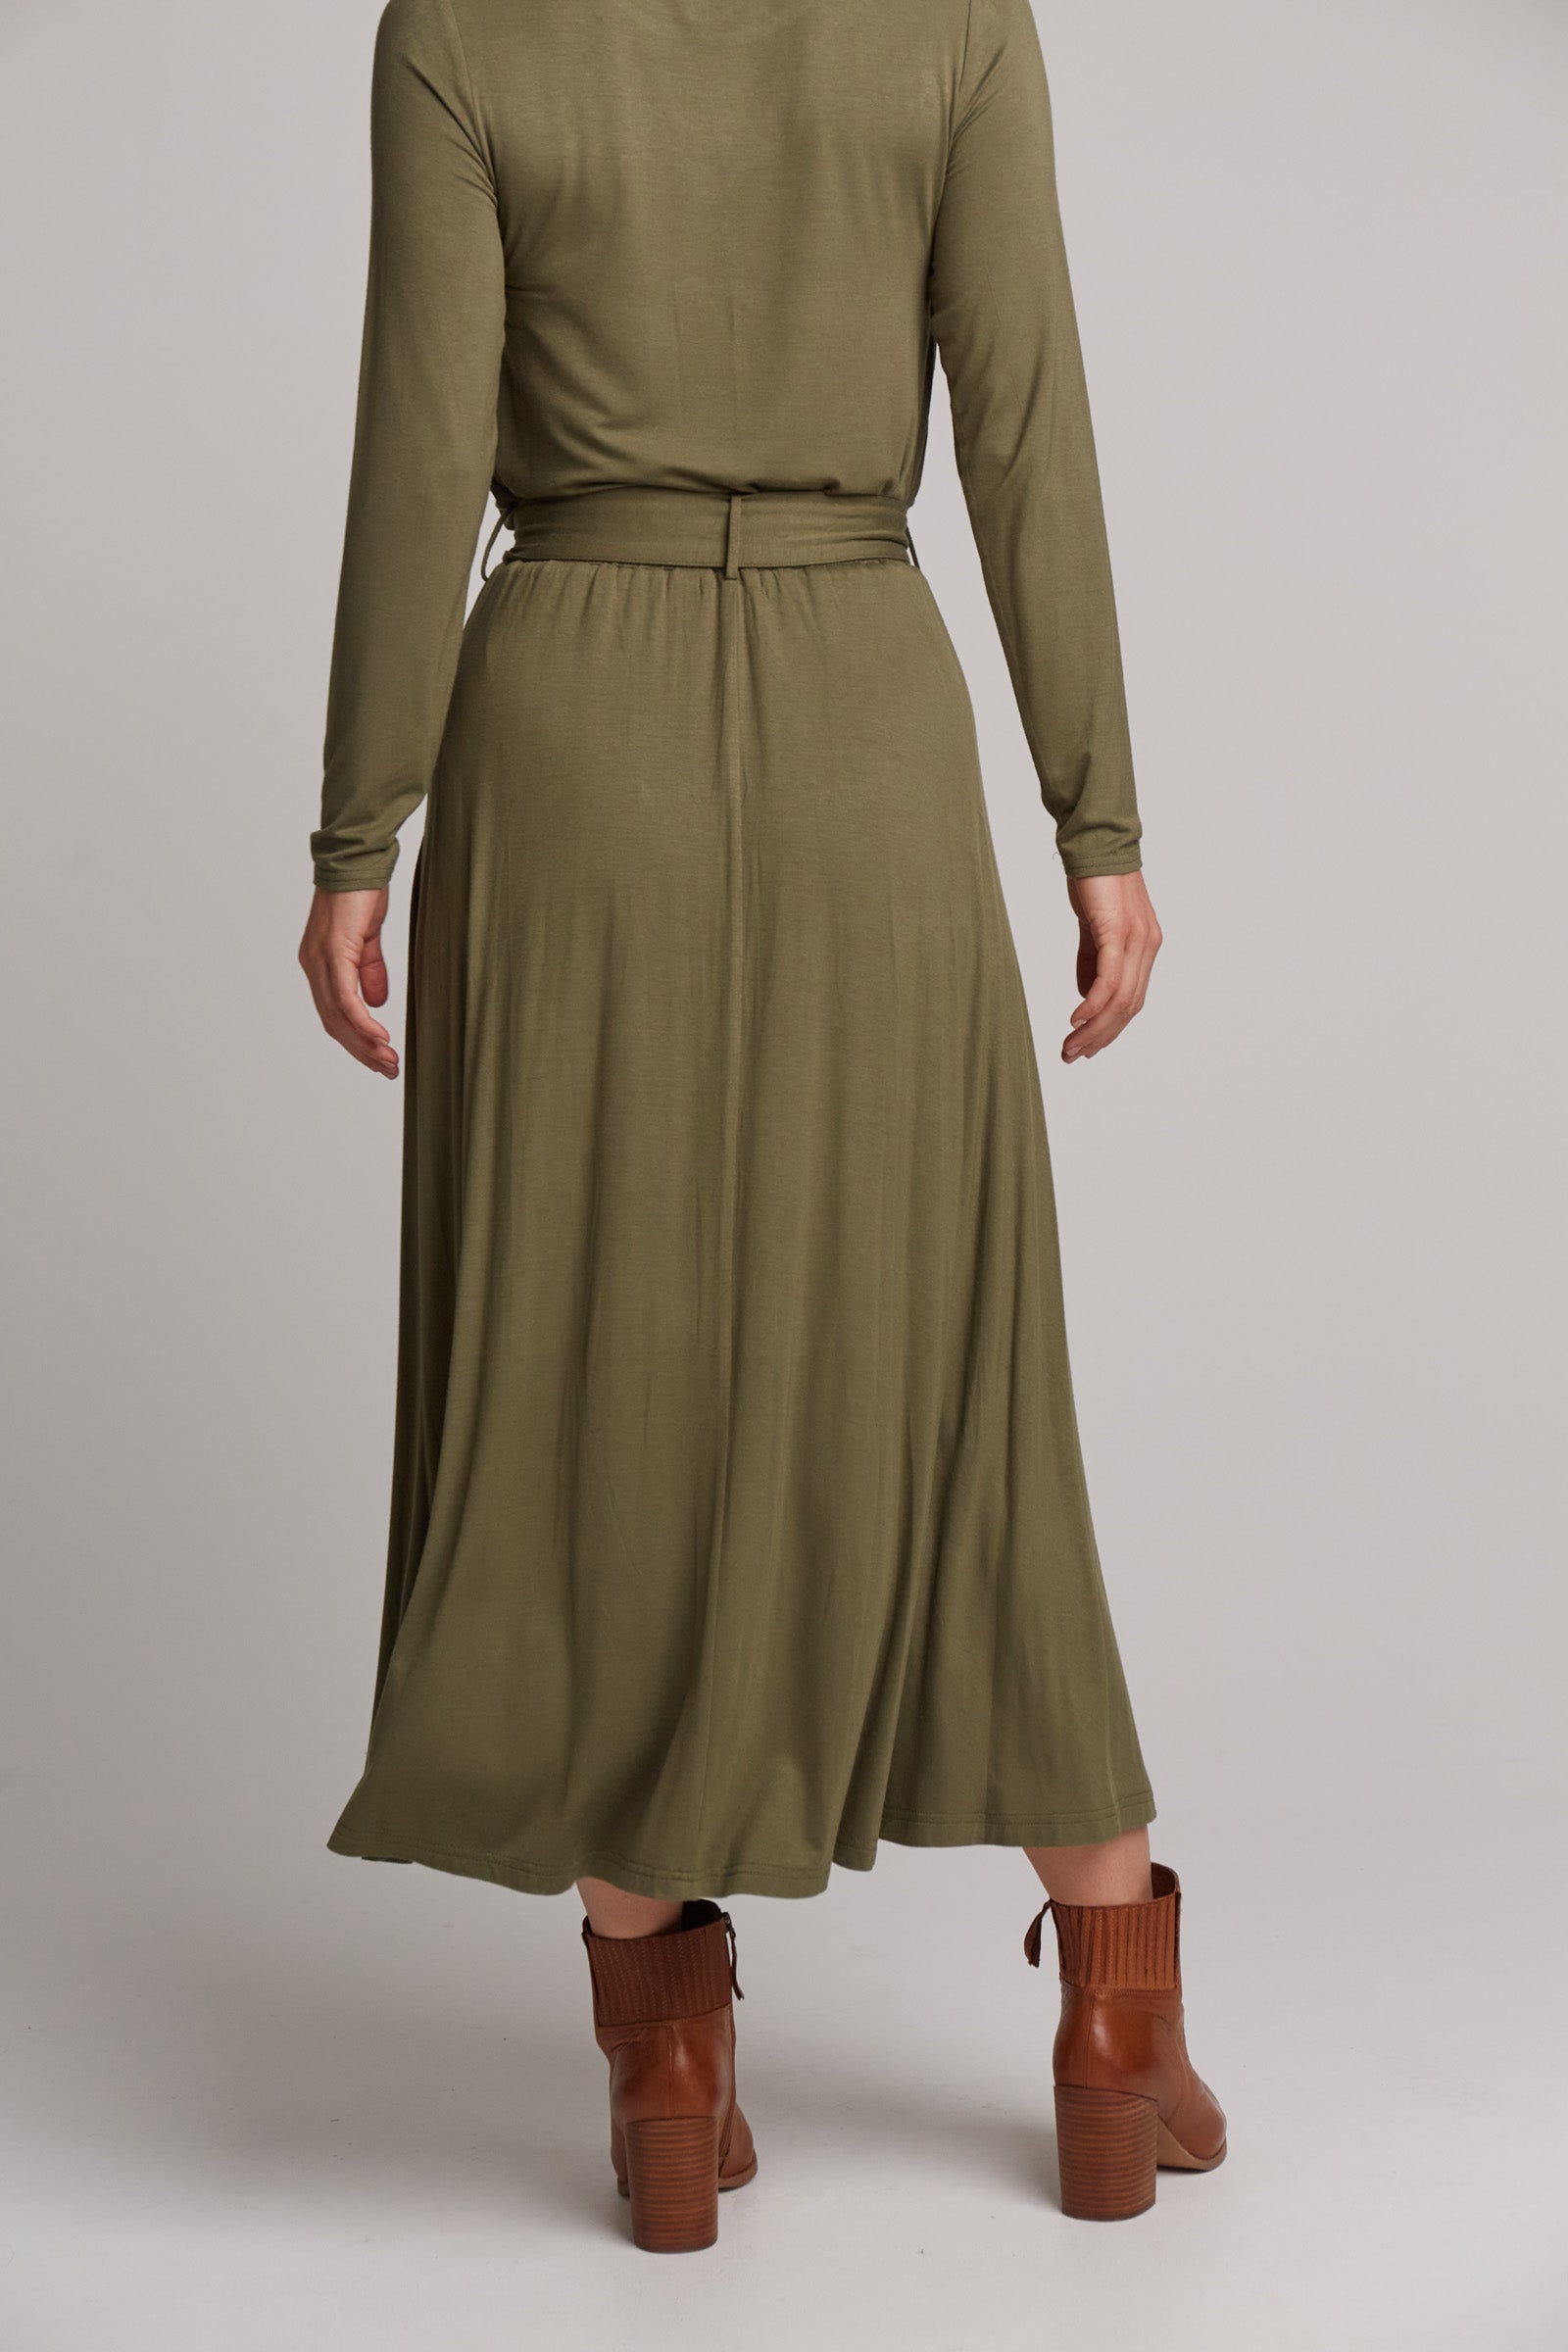 Studio Jersey Tie Skirt - Fern - eb&ive Clothing - Skirt Maxi